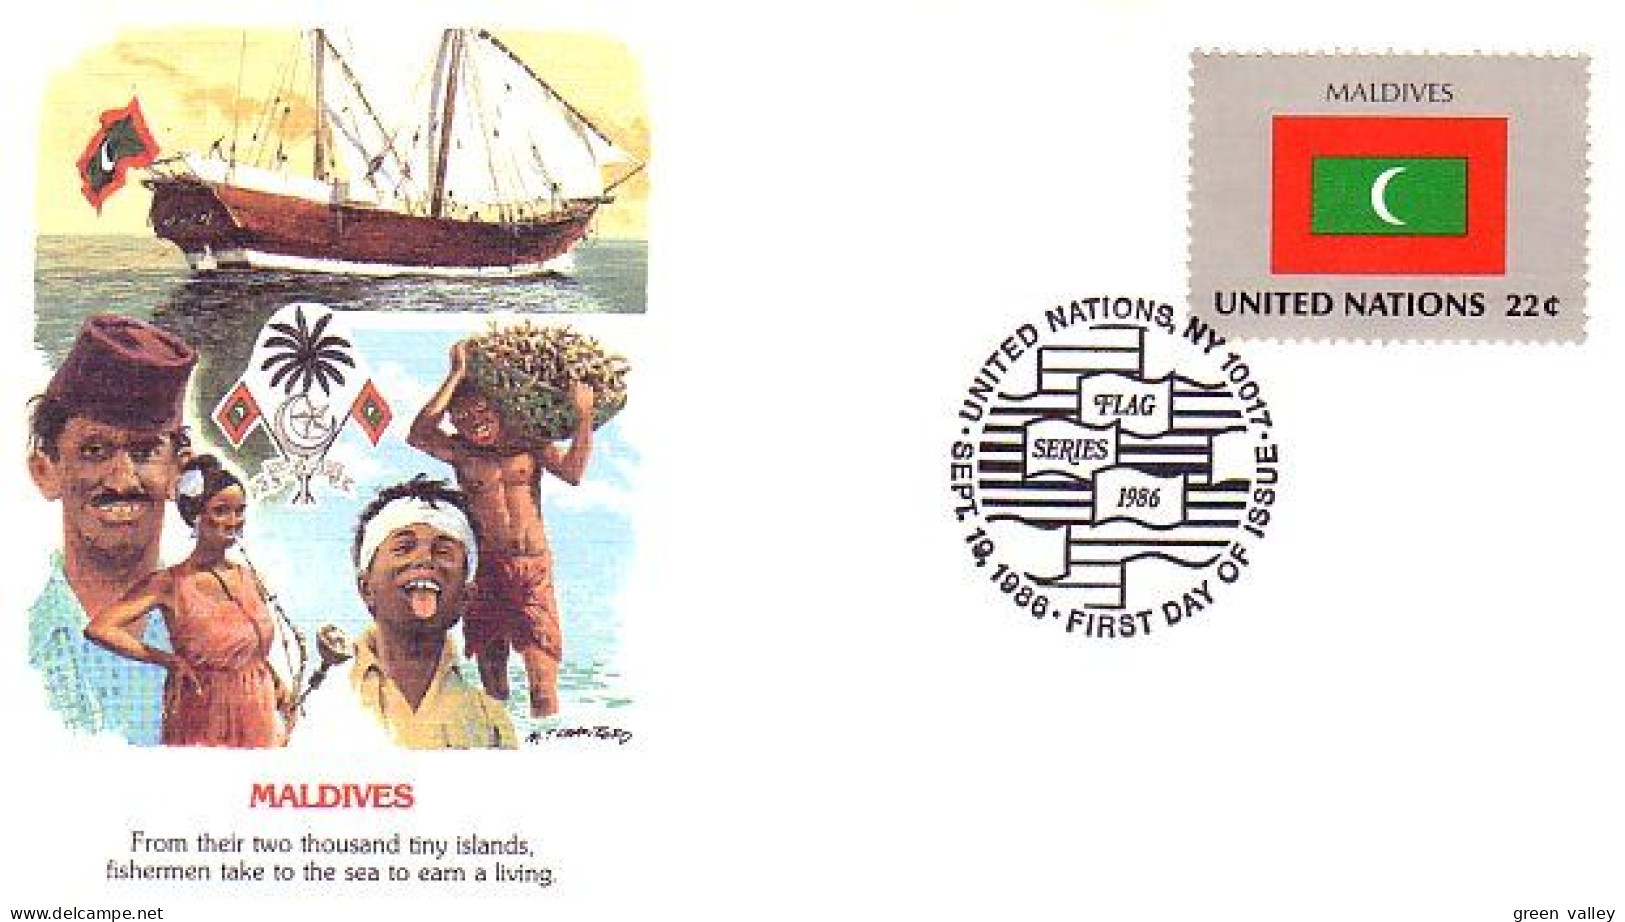 Maldives Flag Drapeau Fishermen FDC Cover ( A90 198) - Enveloppes